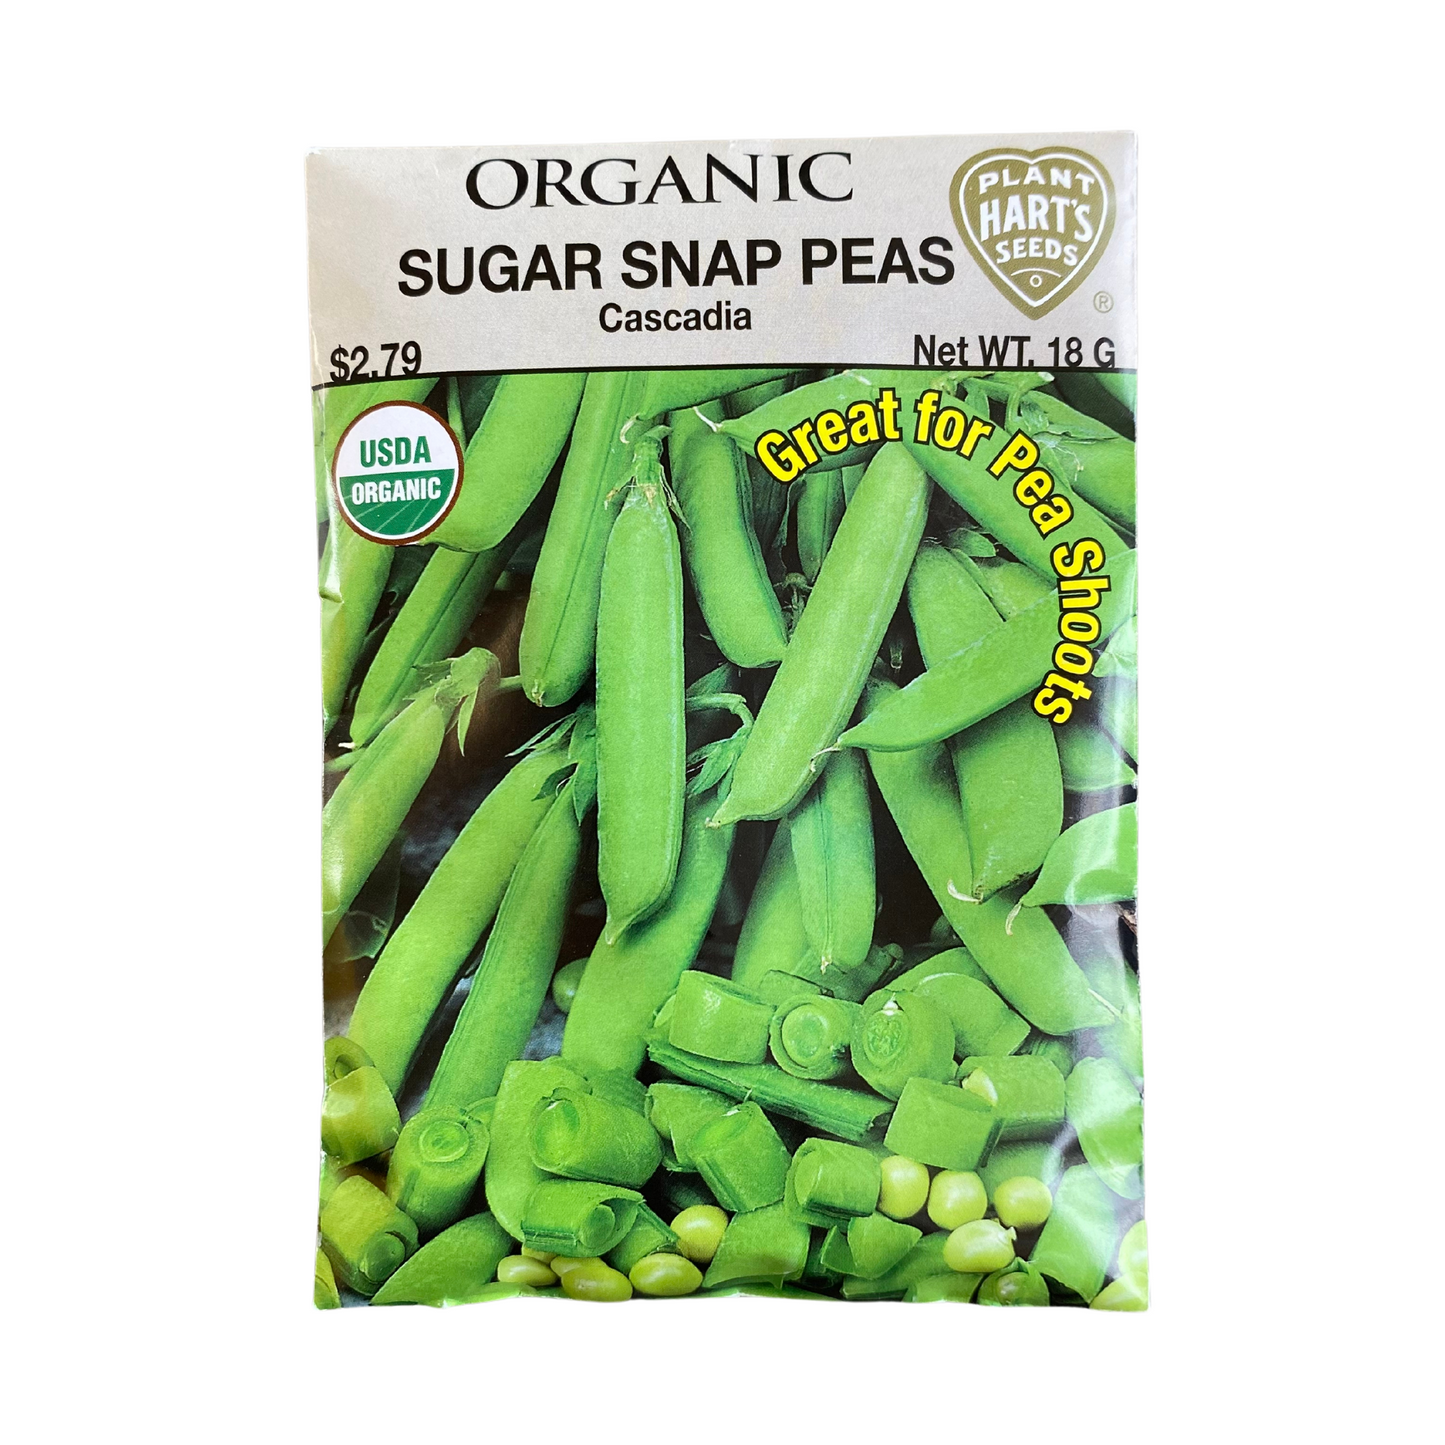 Organic Pea Sugar Snap Cascadia